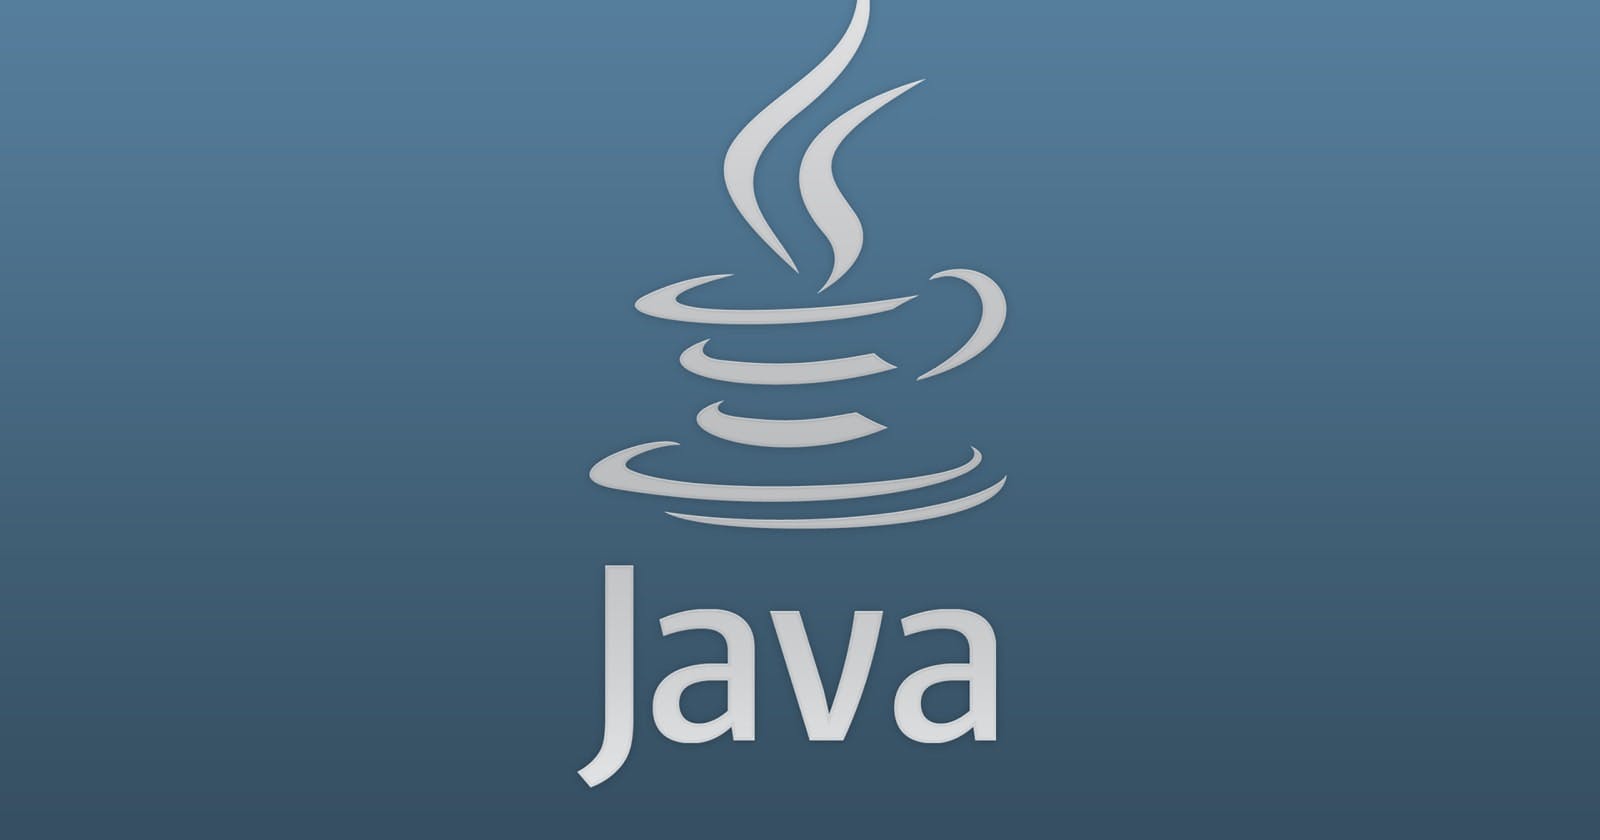 10 most useful string methods in Java